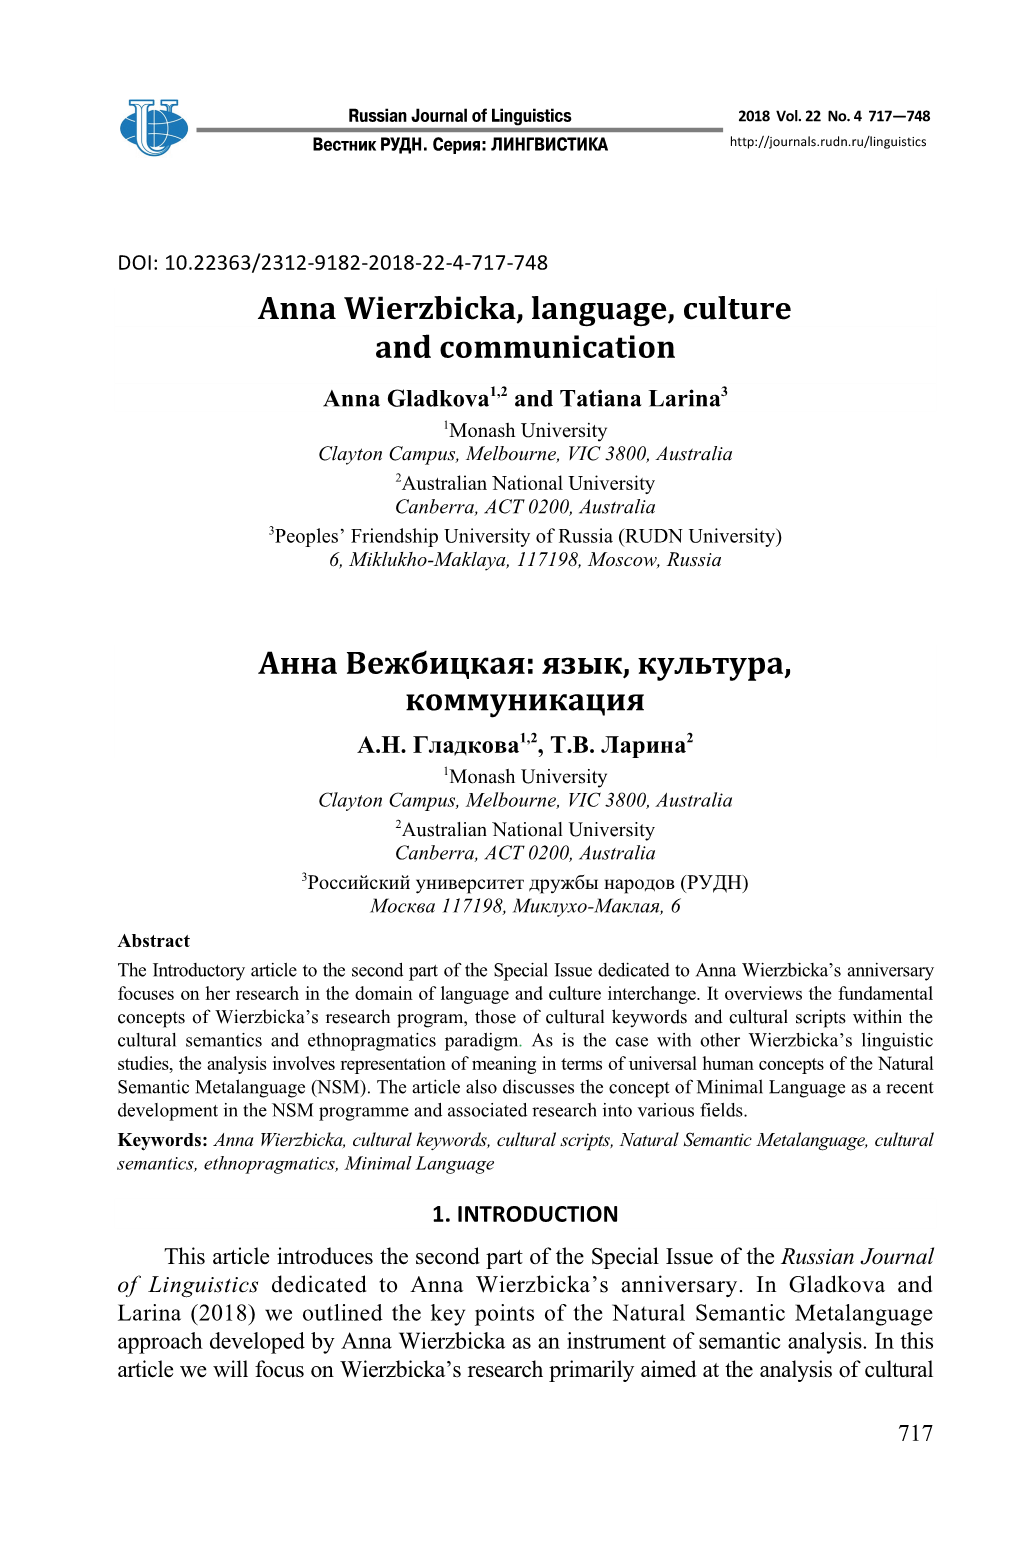 Anna Wierzbicka, Language, Culture and Communication Анна Вежбицкая